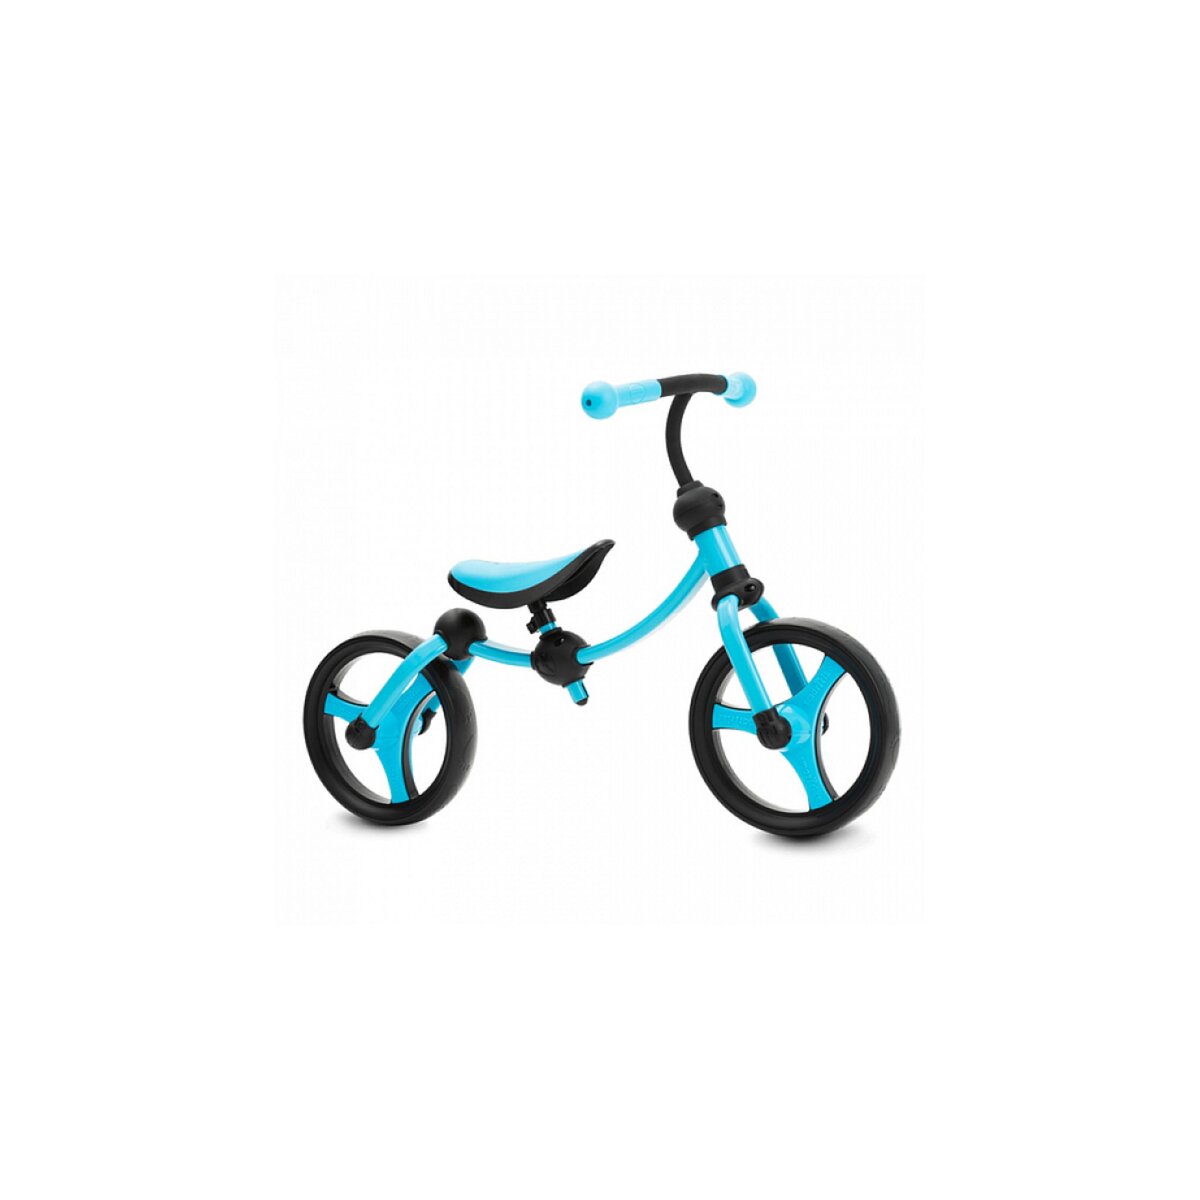 Draisienne tricycle 2 en 1 turquoise